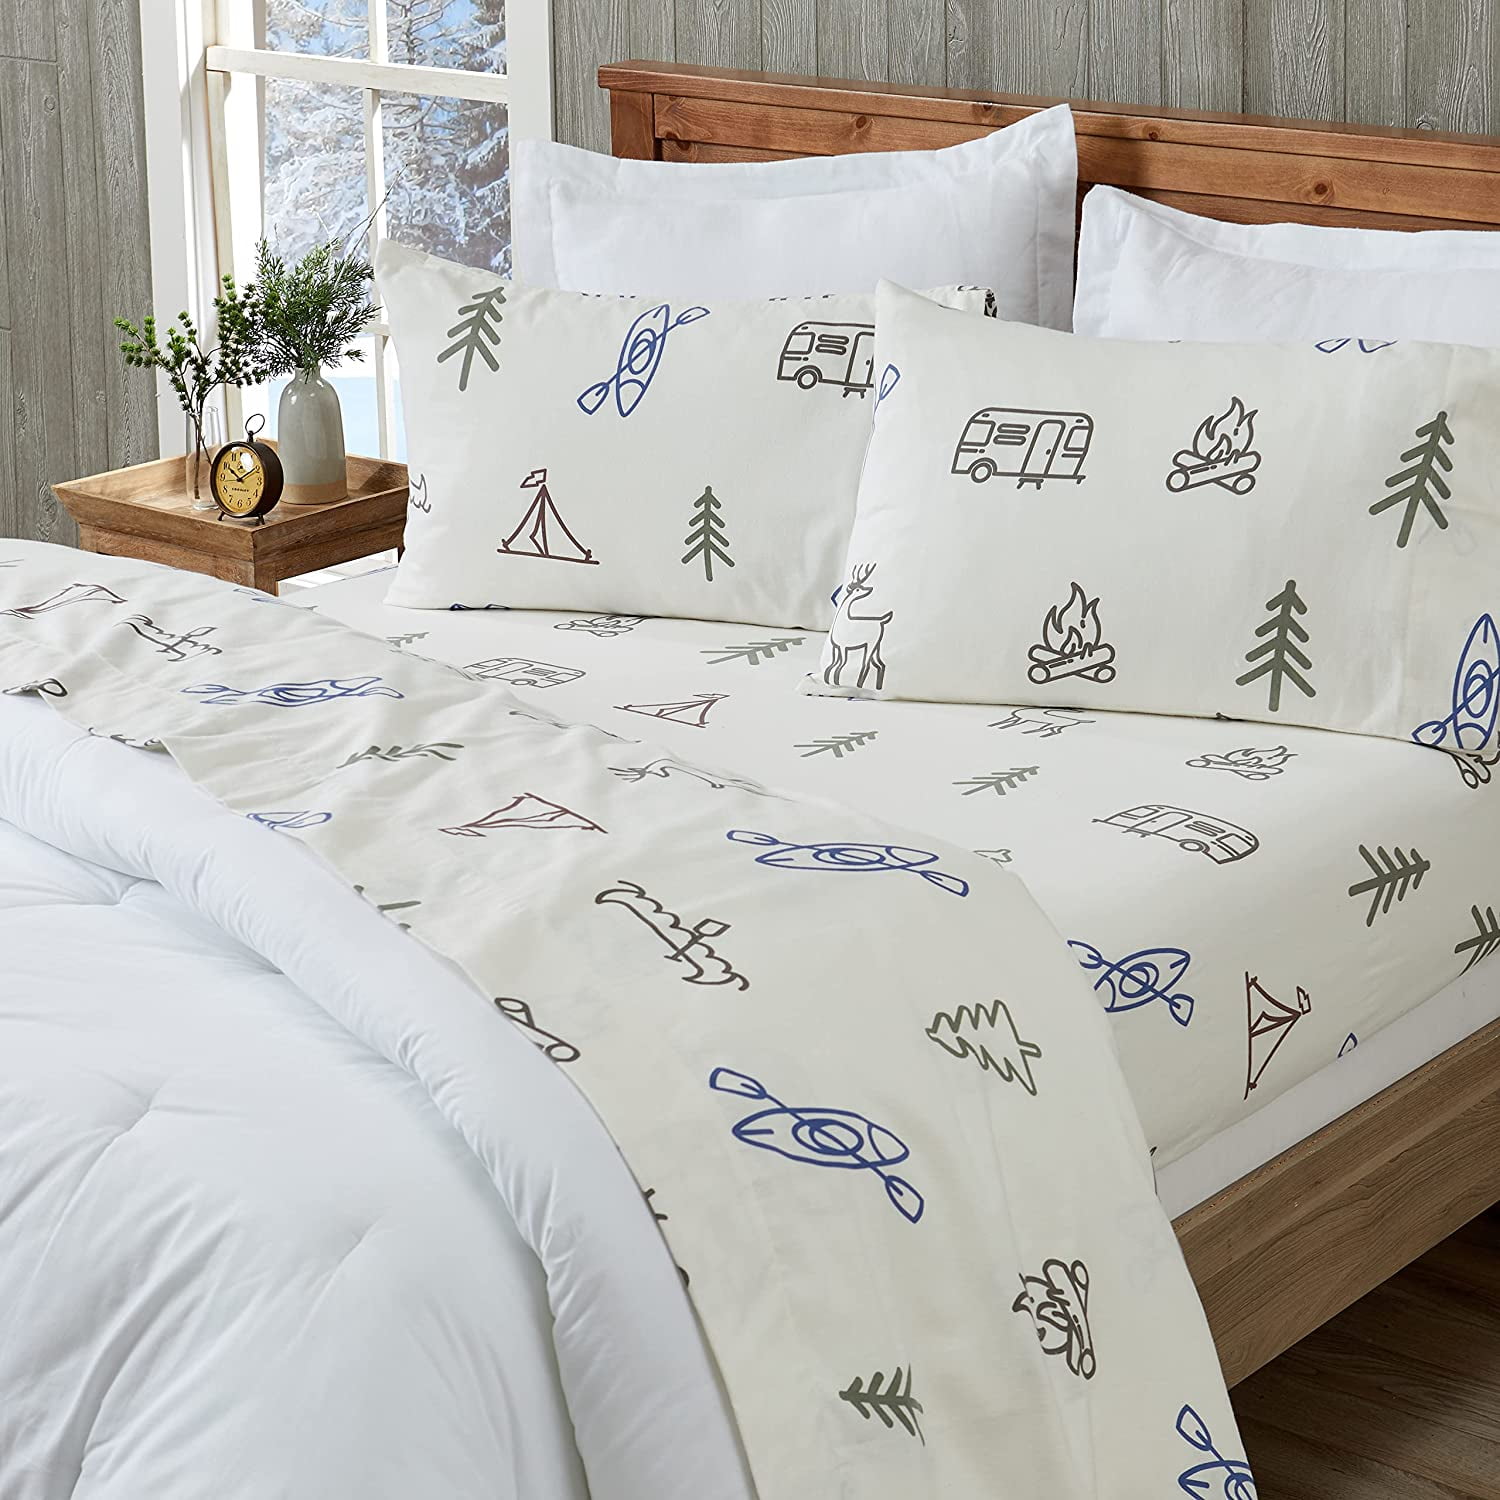 Luxury Cotton Flannel Sheet Set Deep Pocket Warm Cozy Super Soft Bedding 